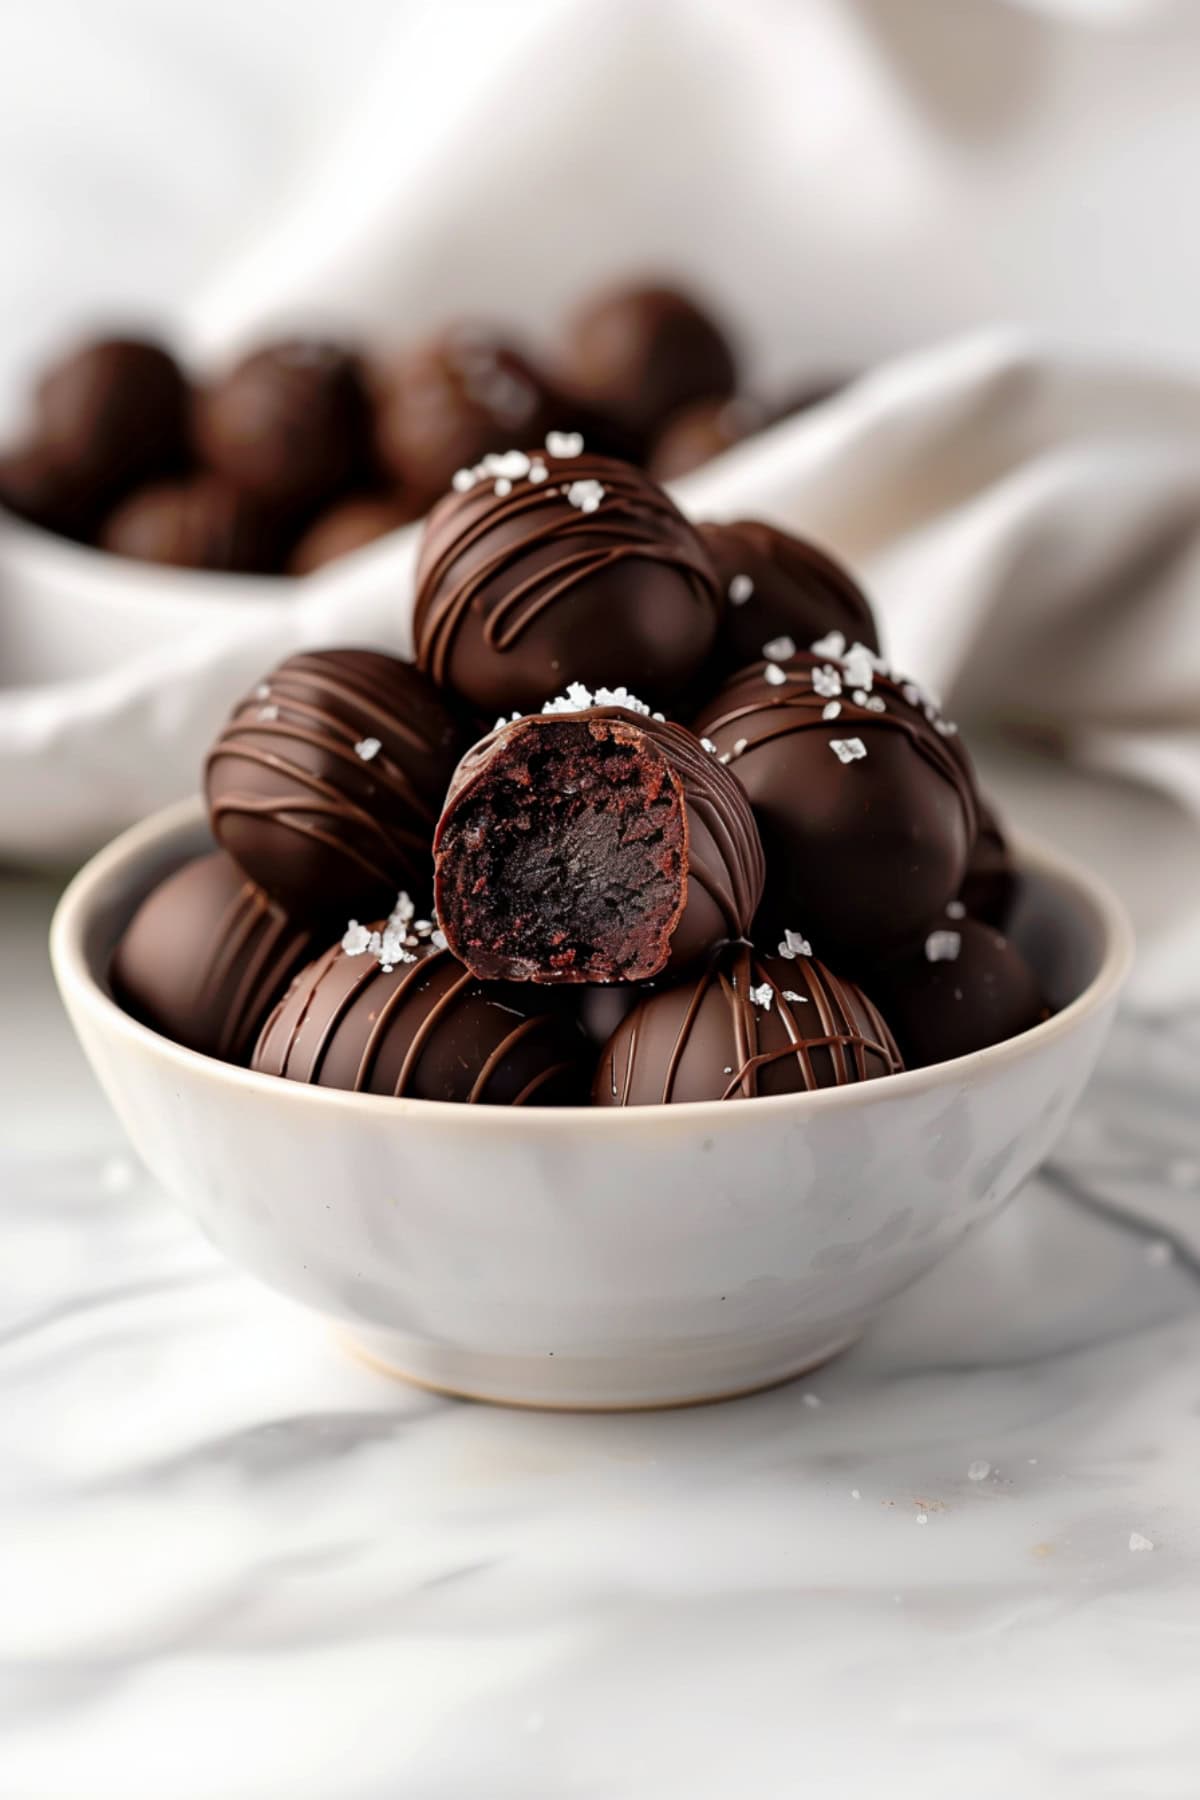 Homemade brownie truffle balls with chocolate glaze and sea salt